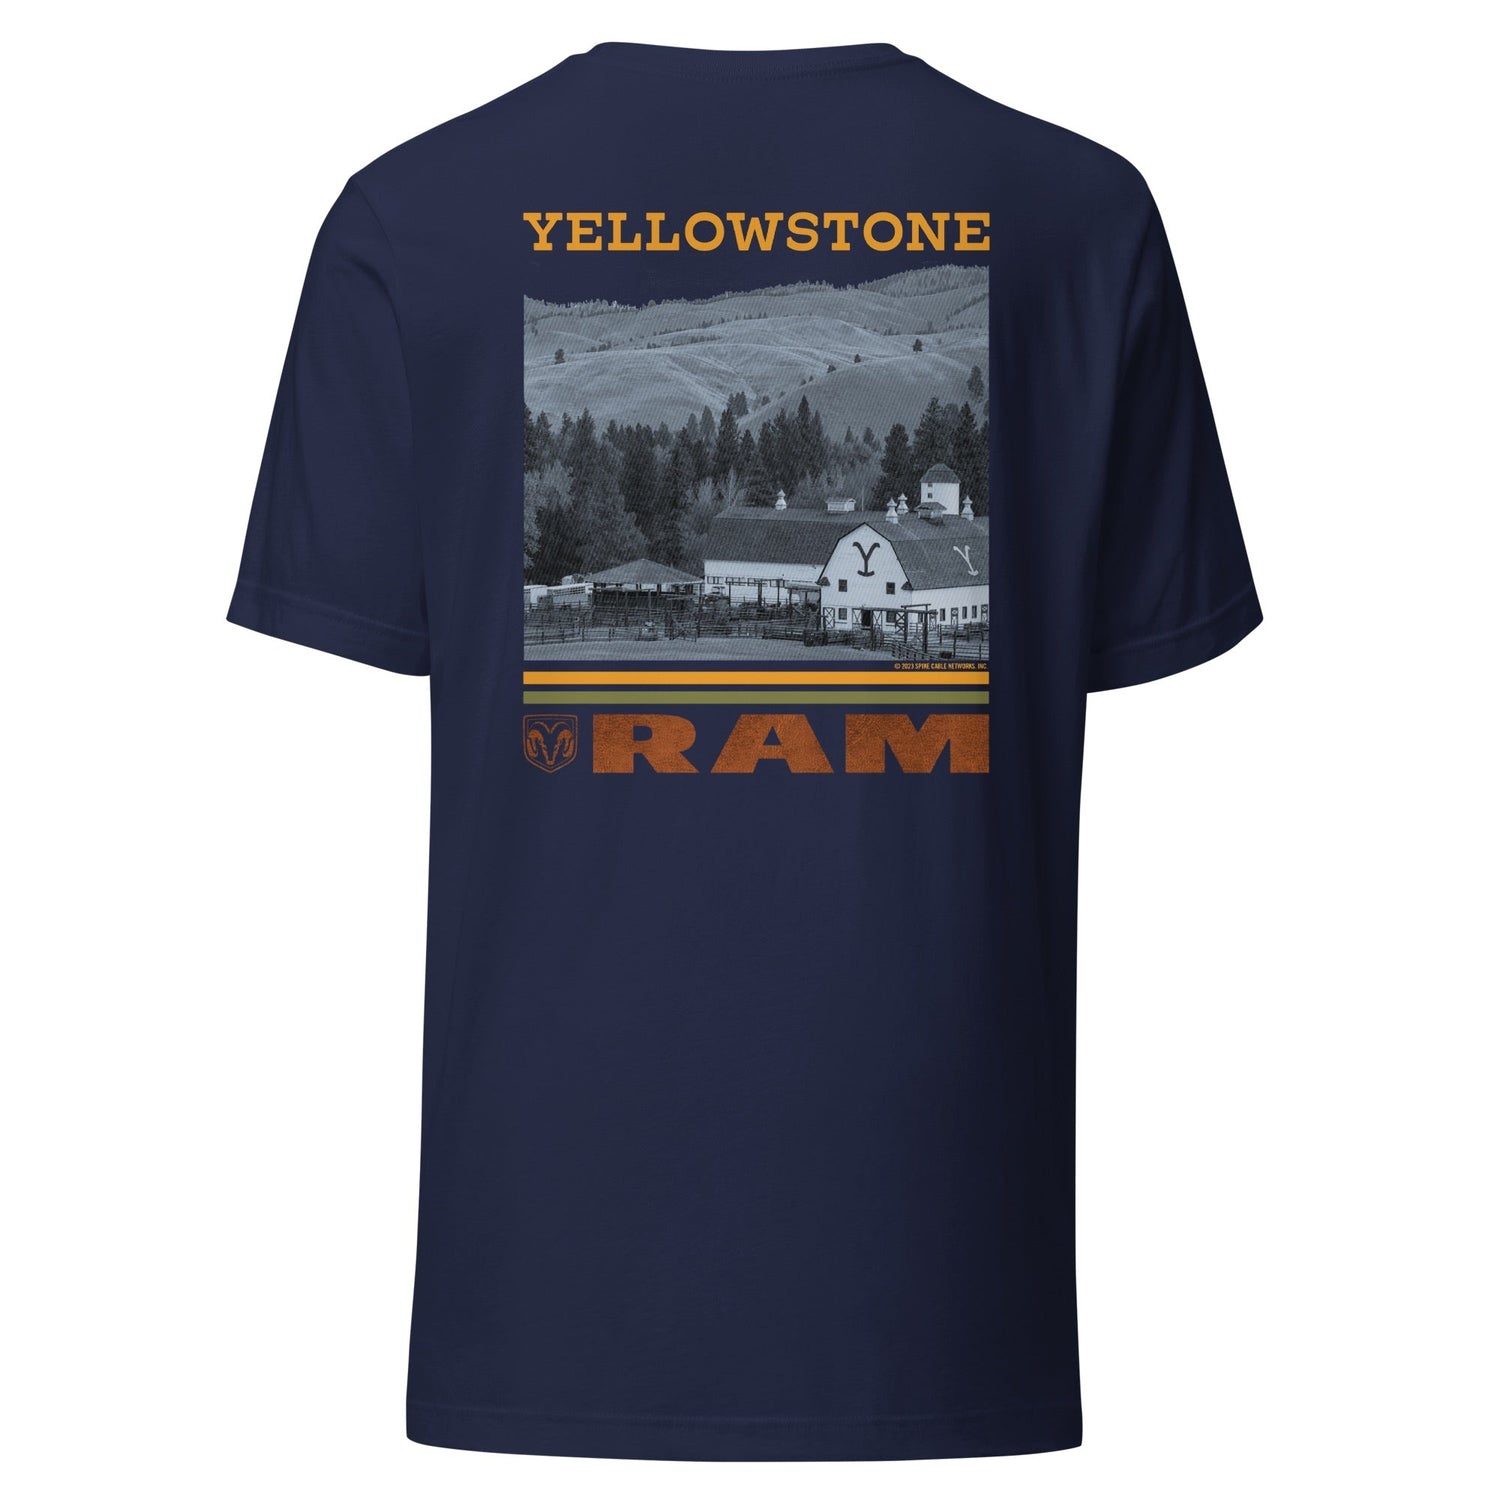 Yellowstone x Ram Scenic T - Shirt - Paramount Shop